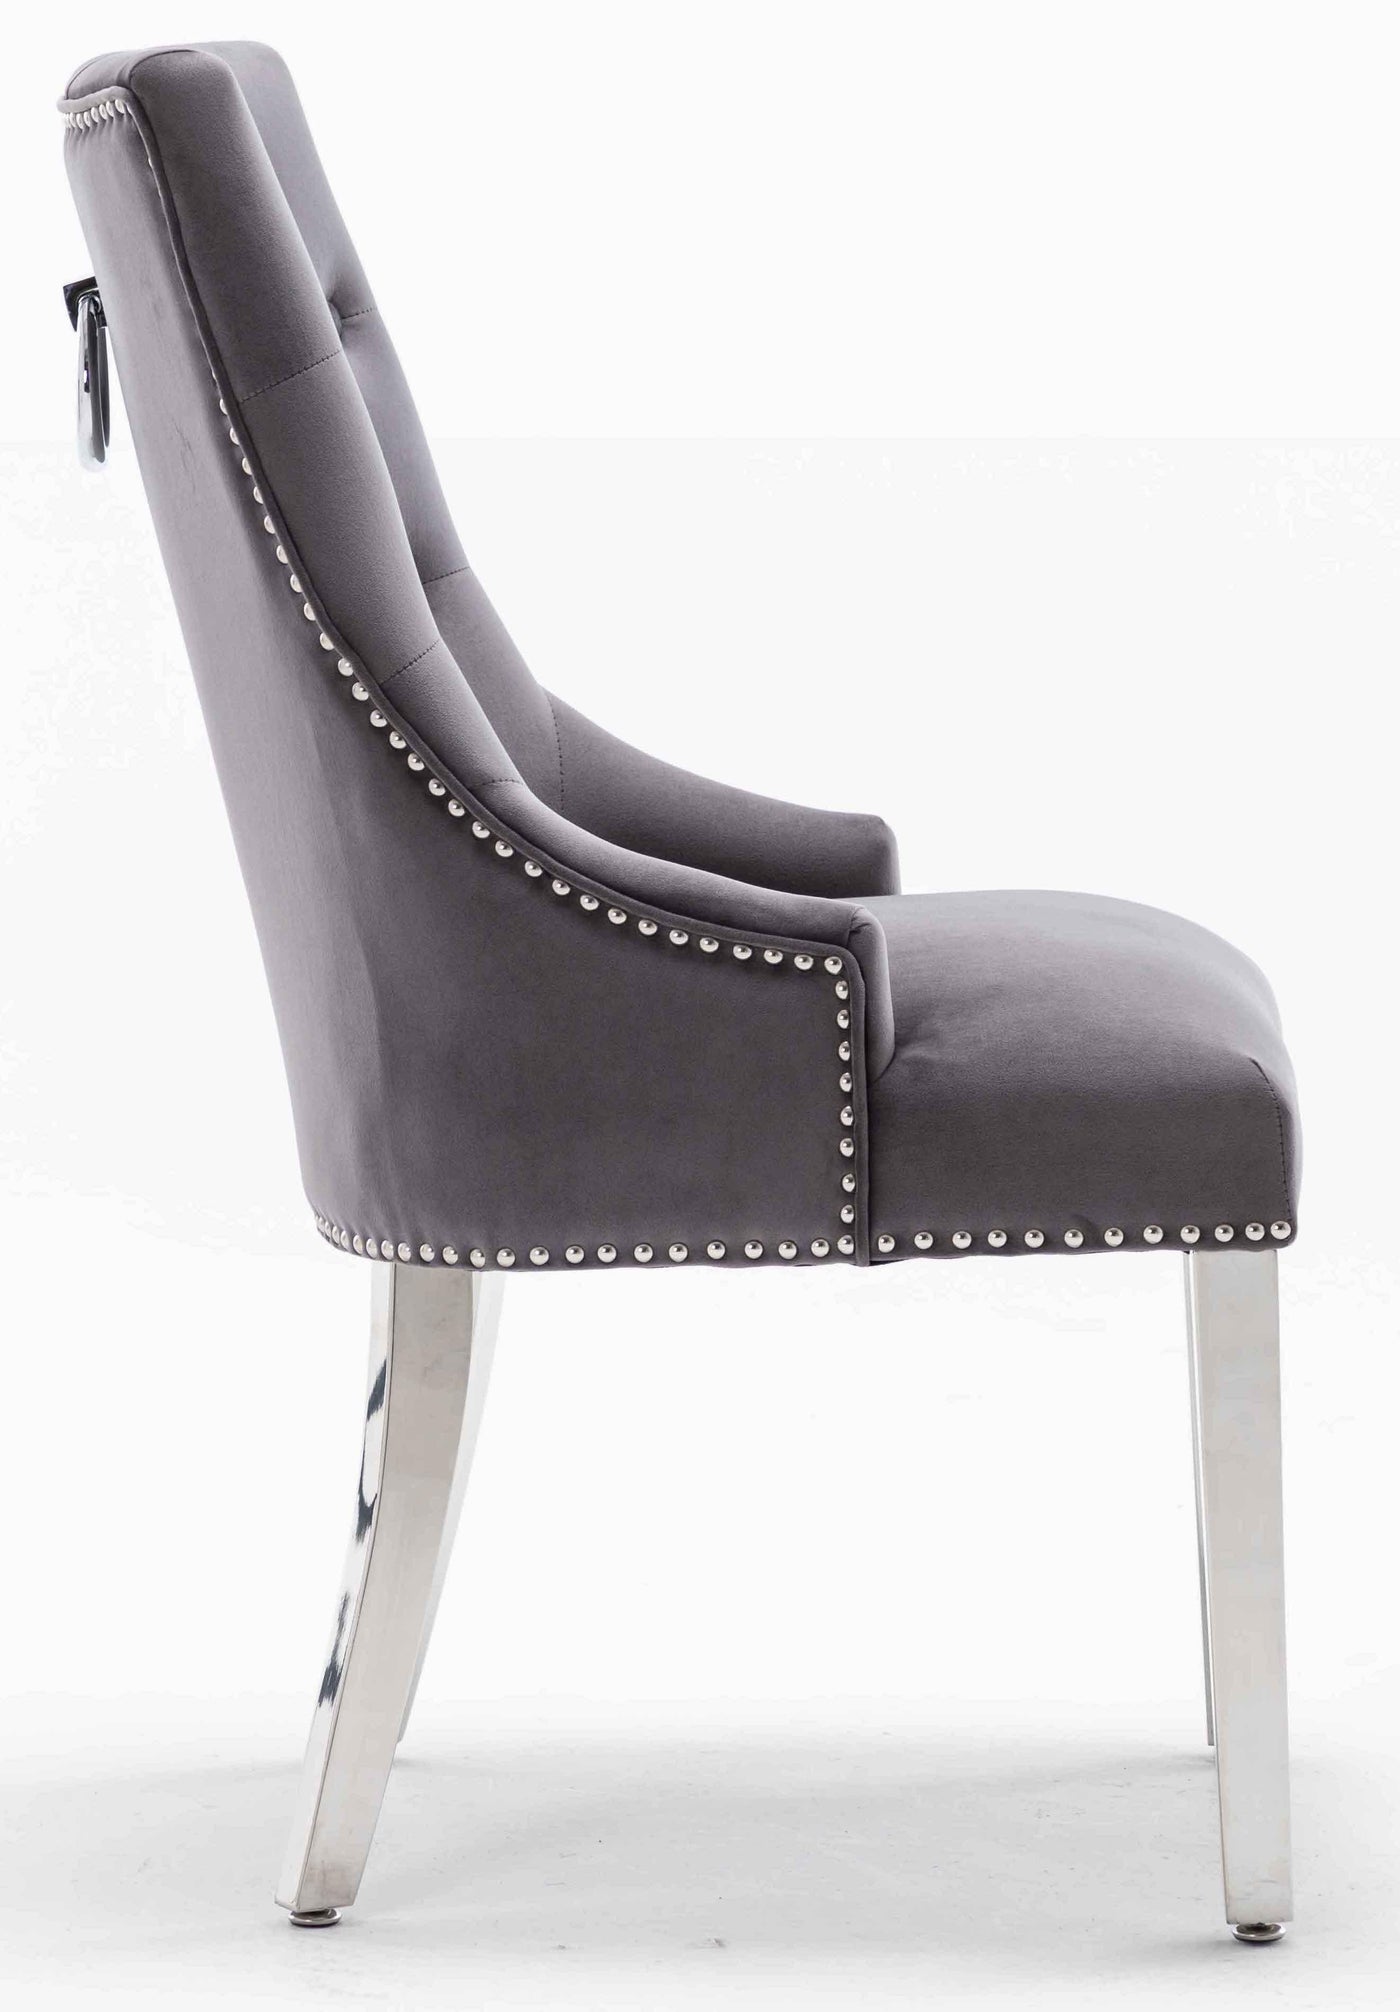 Louis 200cm Grey Marble Dining Table + Knightsbridge Dark Grey Knocker Plush Velvet Chairs-Esme Furnishings